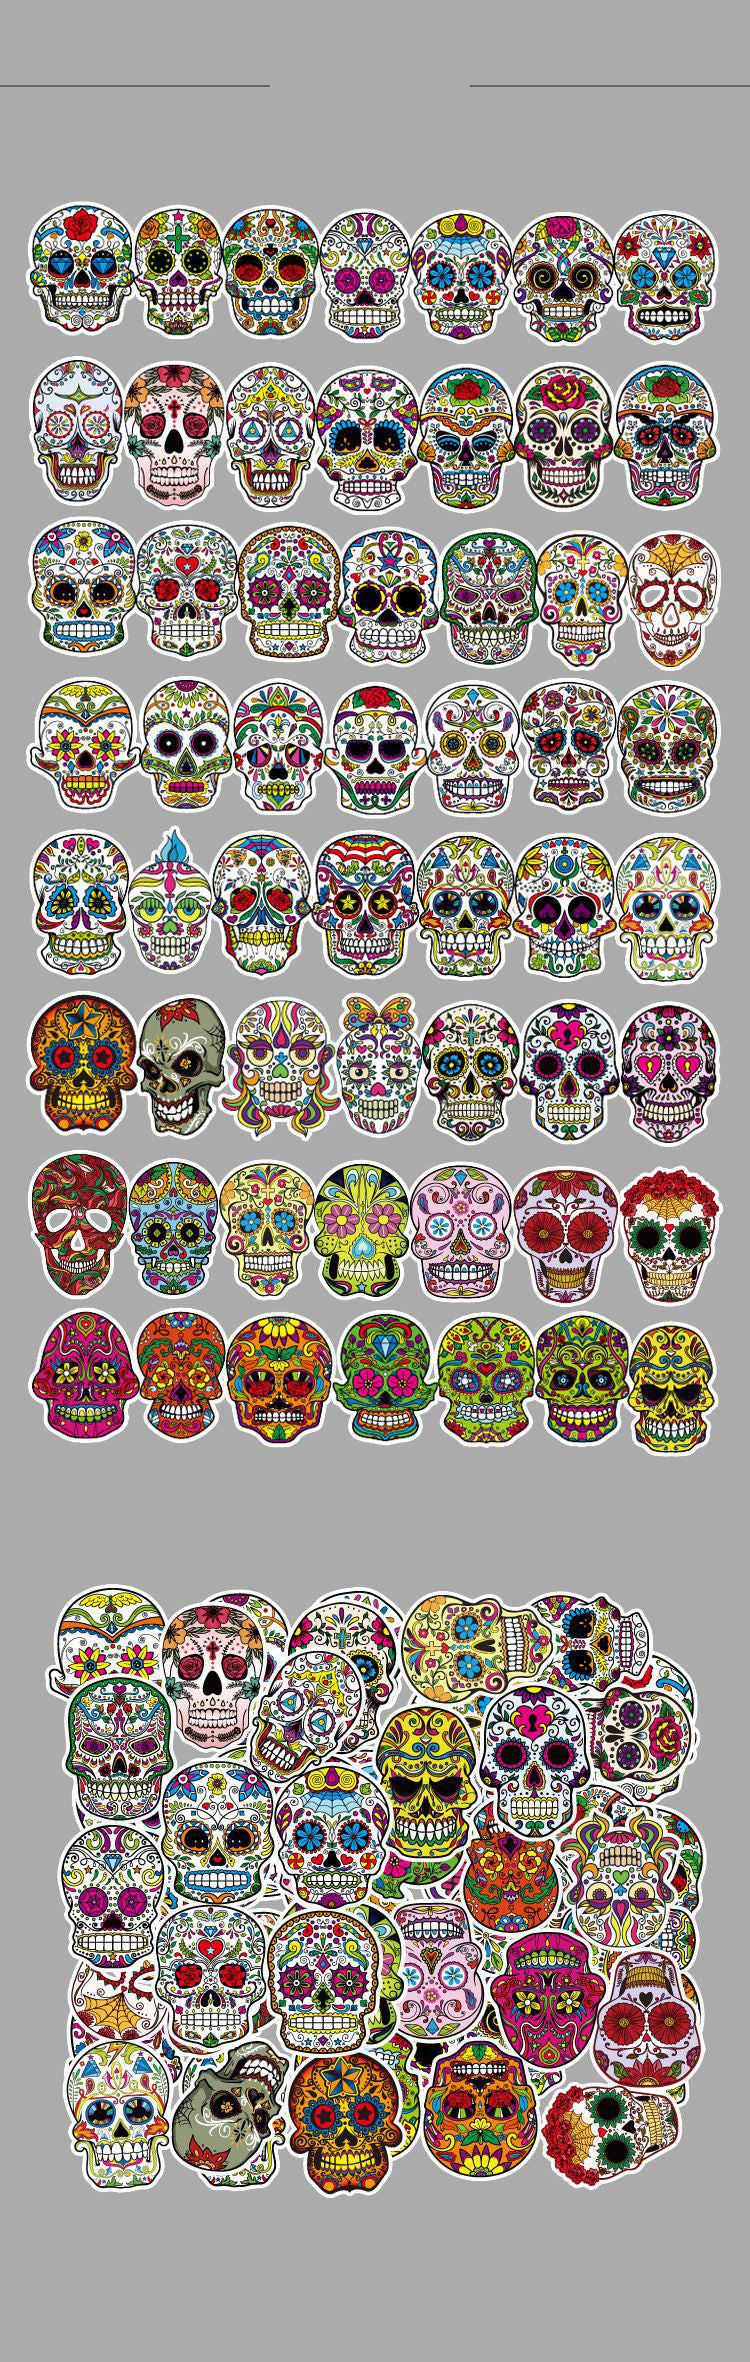 package size:10*10cm 52 pcs symphony skull series waterproof stickers